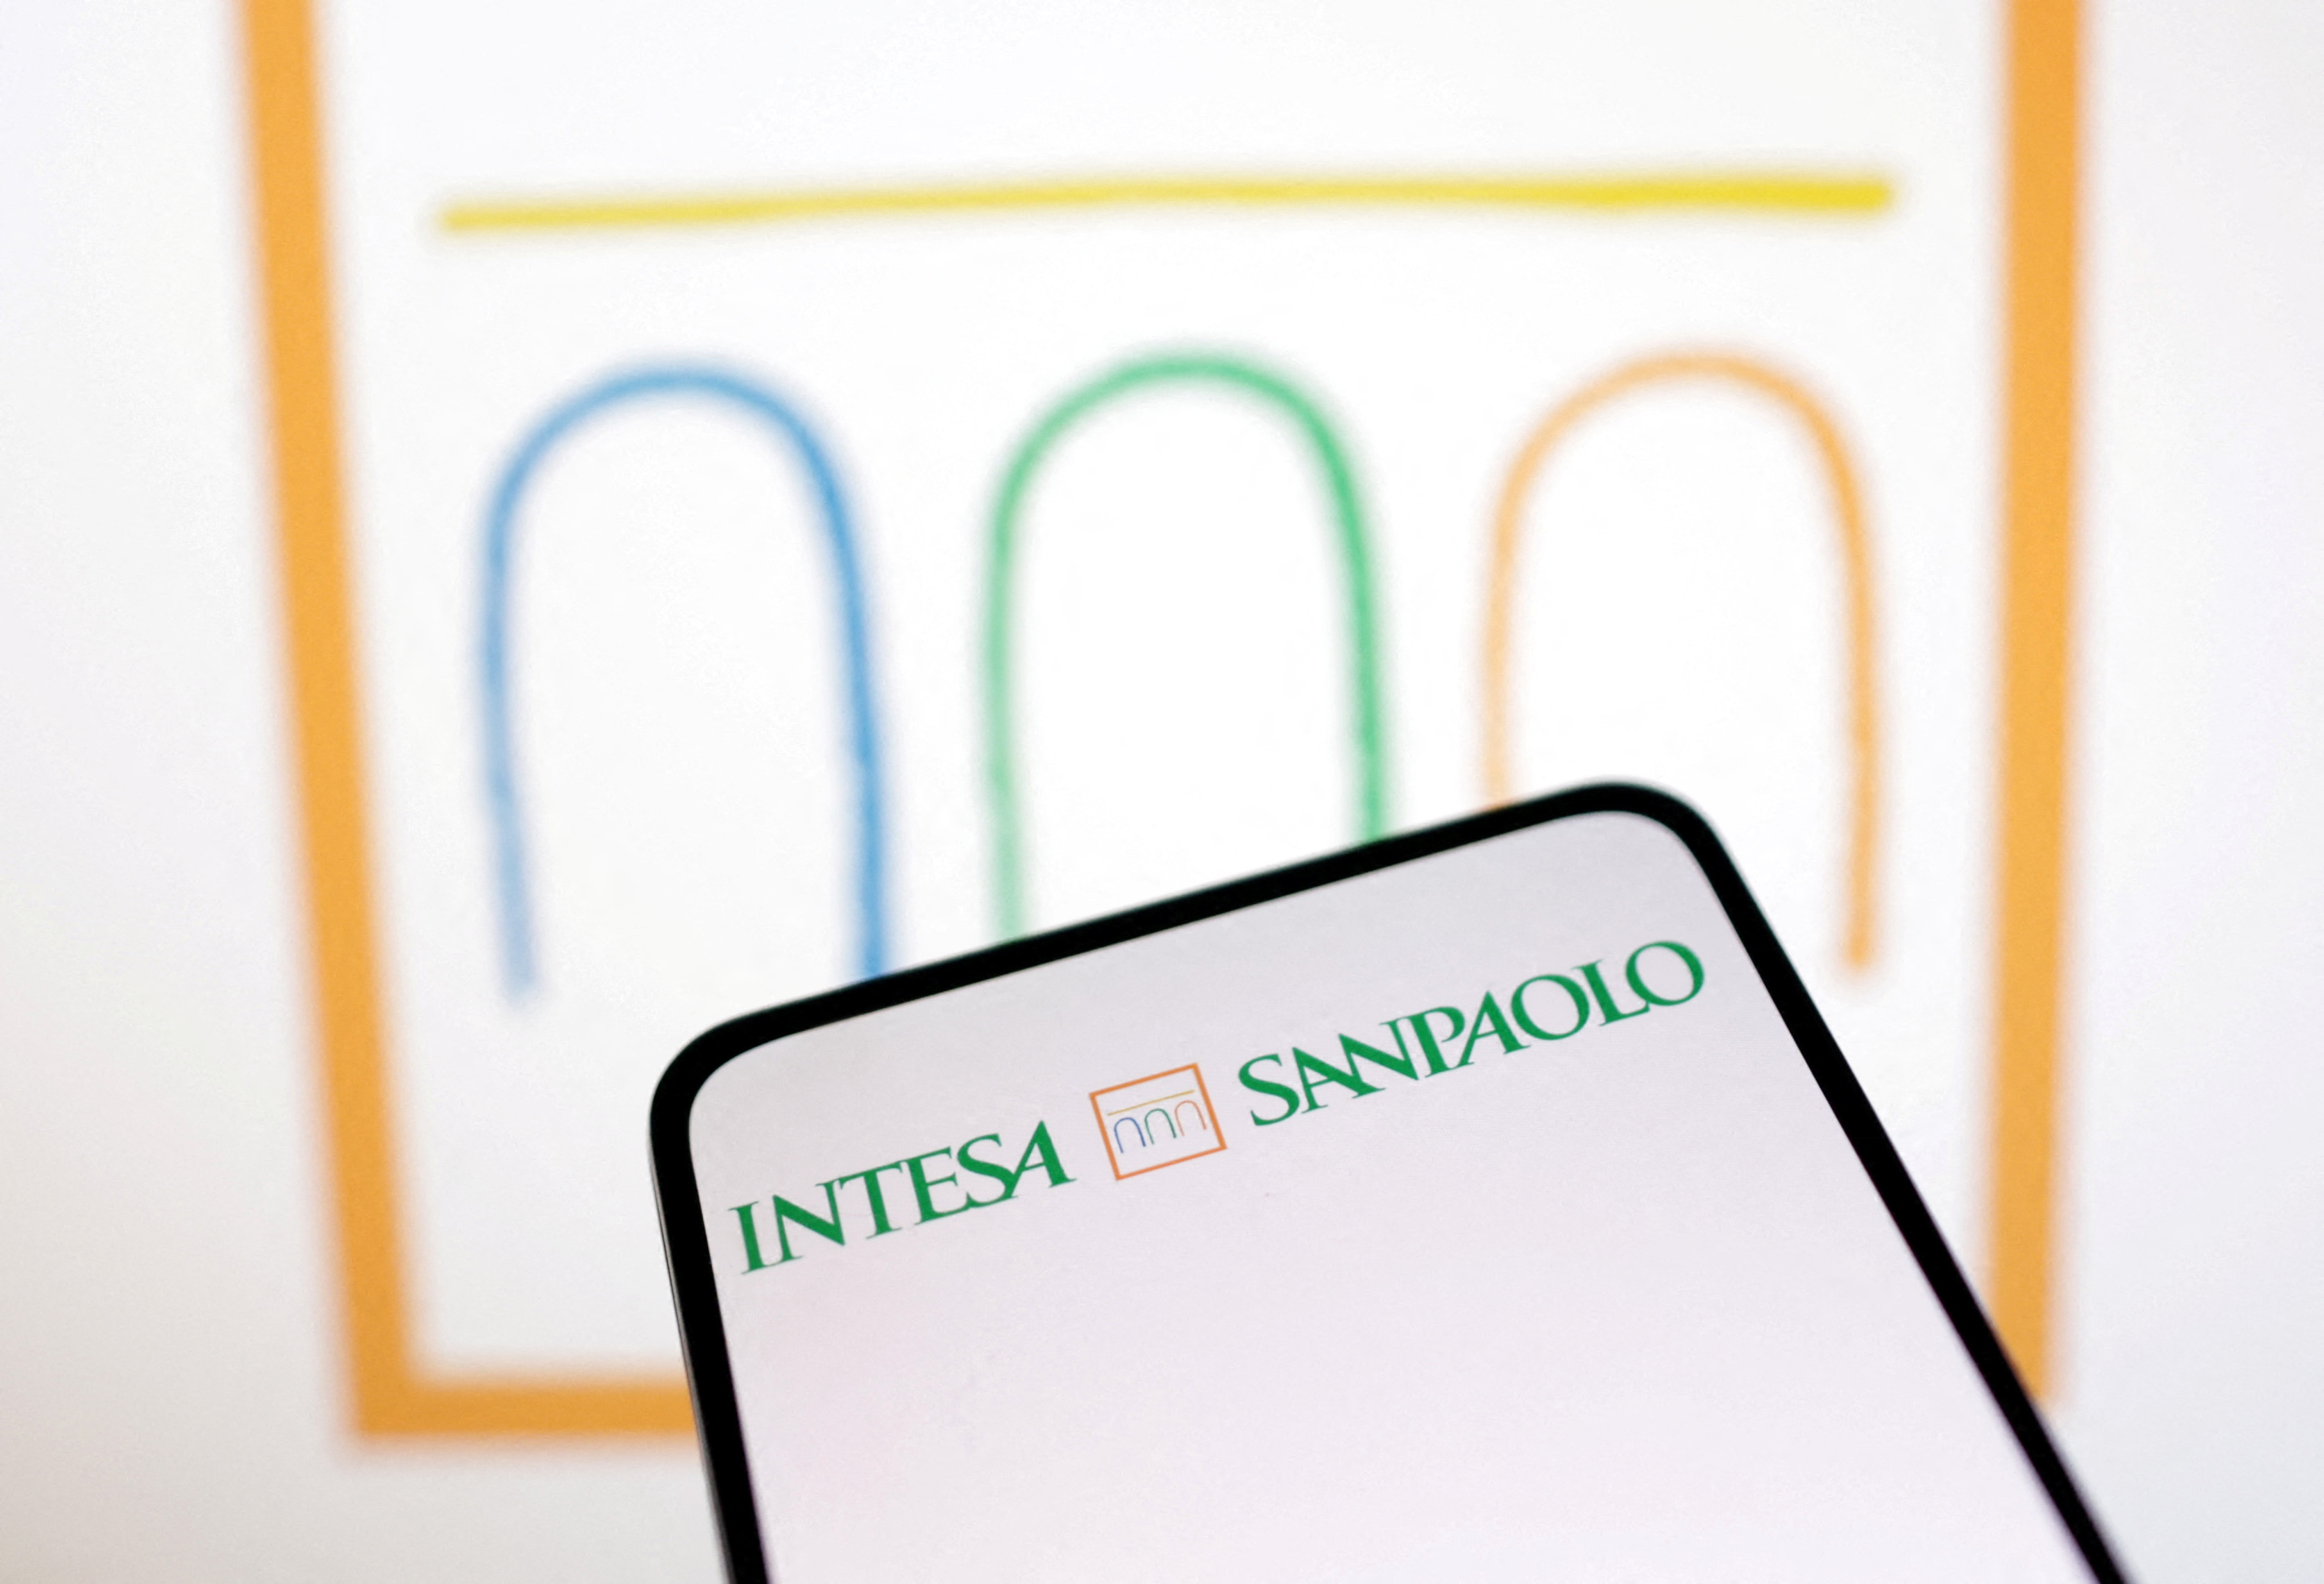 Illustration shows Intesa Sanpaolo Bank logo